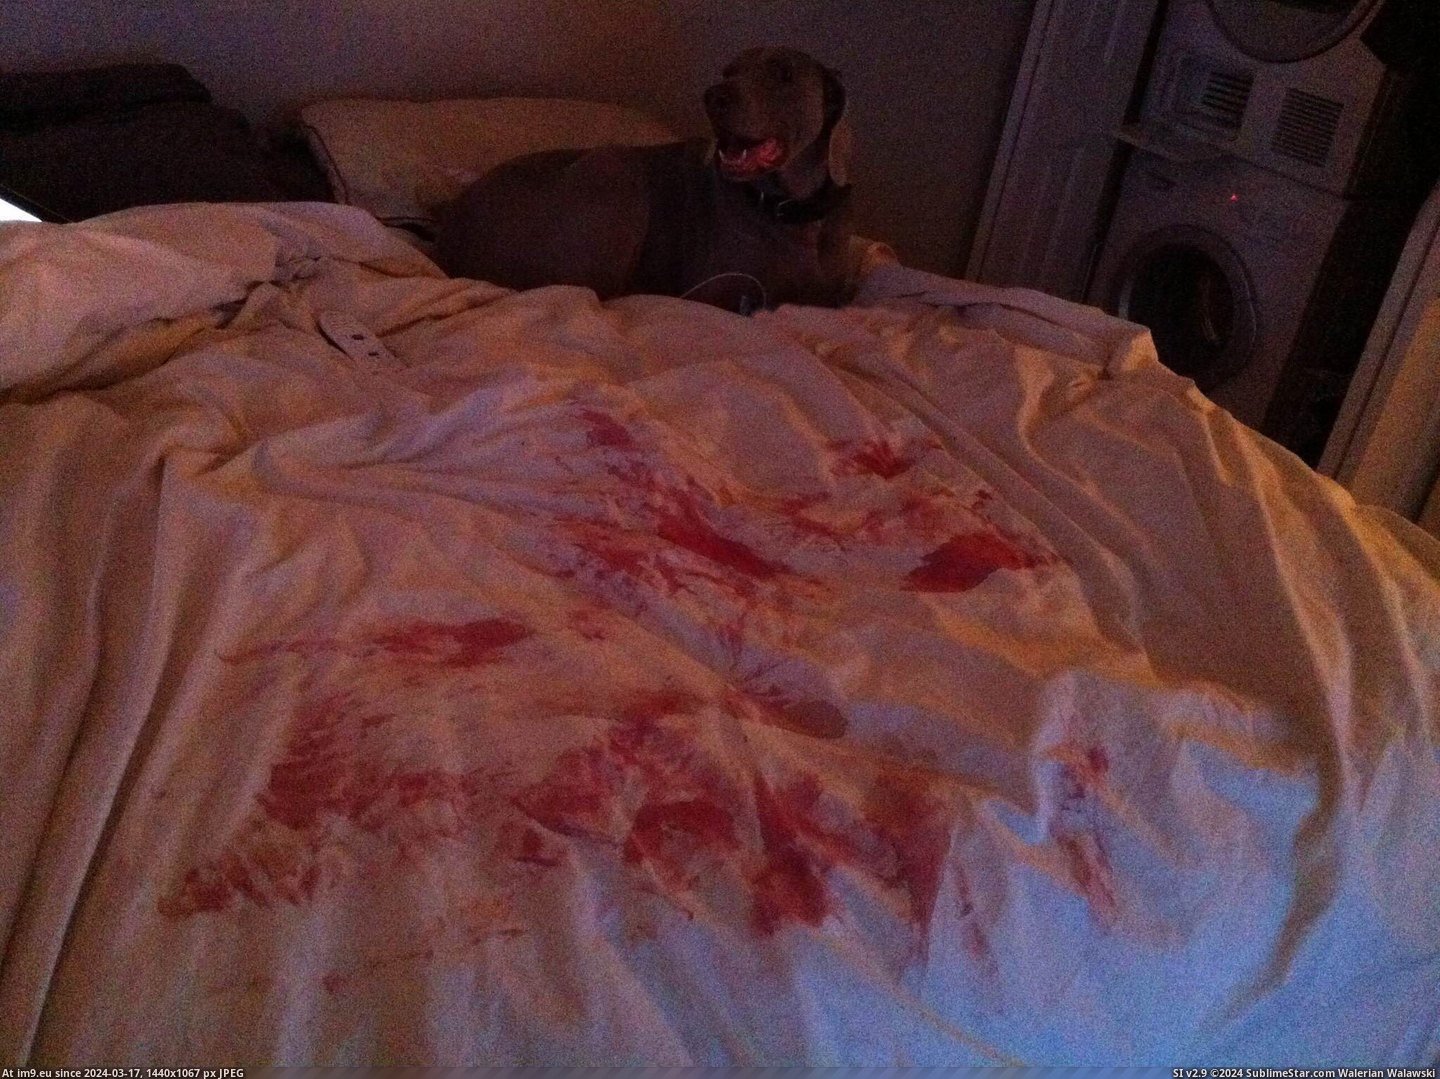 #Wtf #Small #Dog #Walked #Bone #Discover #Gums #Had #Cut #Bedroom [Wtf] Walked into the bedroom to discover my dog had a small cut on his gums from a bone. Pic. (Bild von album My r/WTF favs))